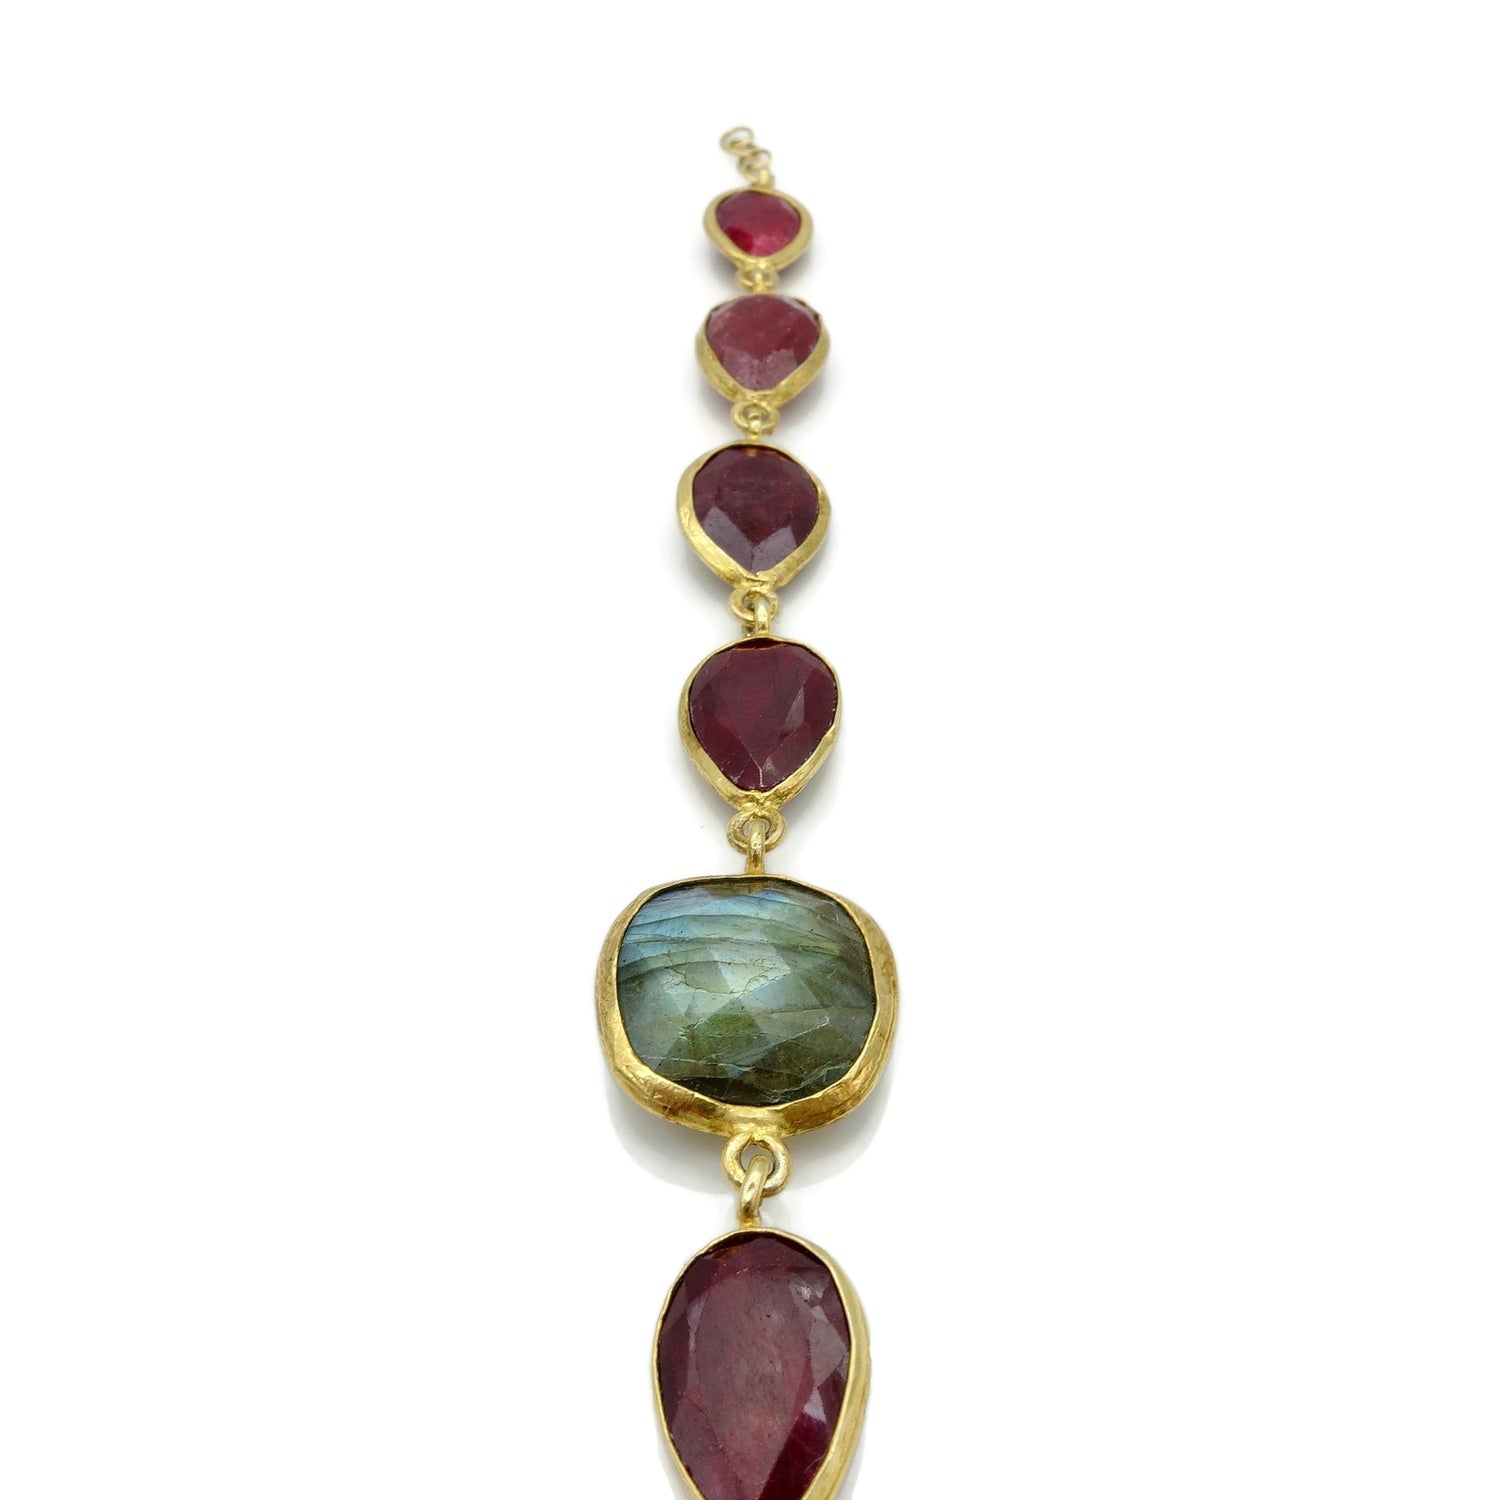 22ct gold plated Bracelet in Ruby, Labradorite Multi semi precious gemstones - Handmade